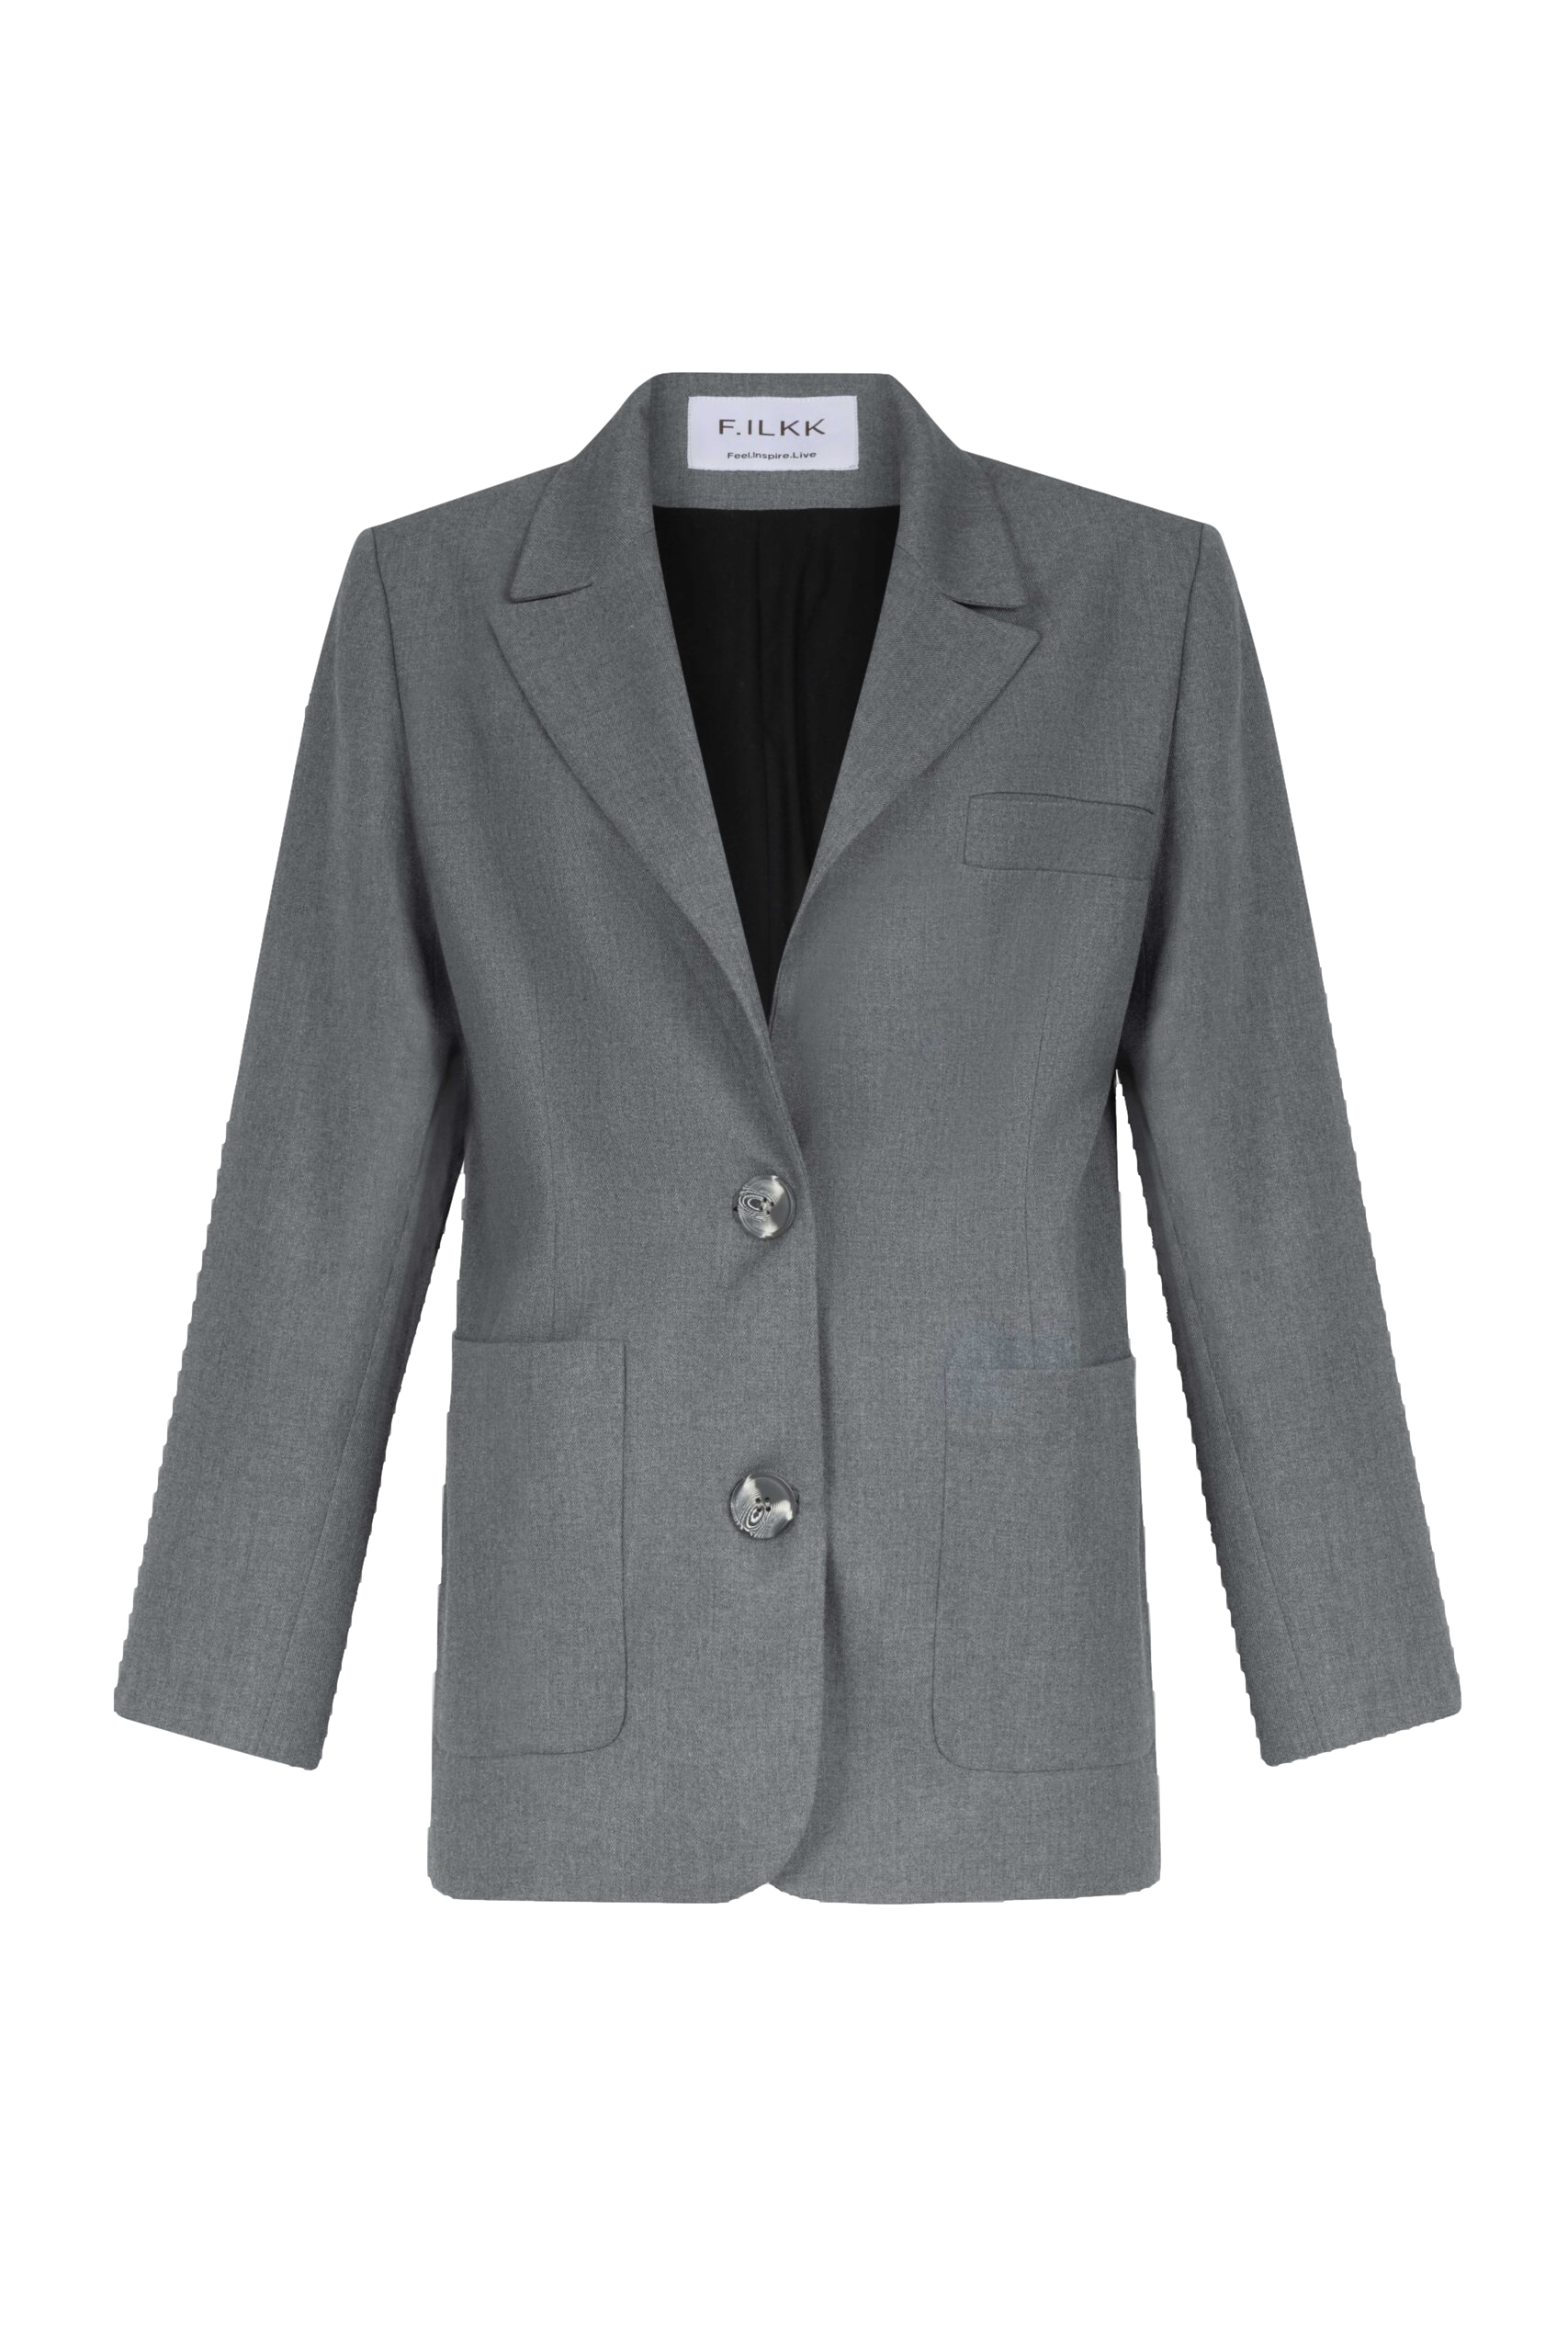 F.ilkk Grey Oversize Jacket